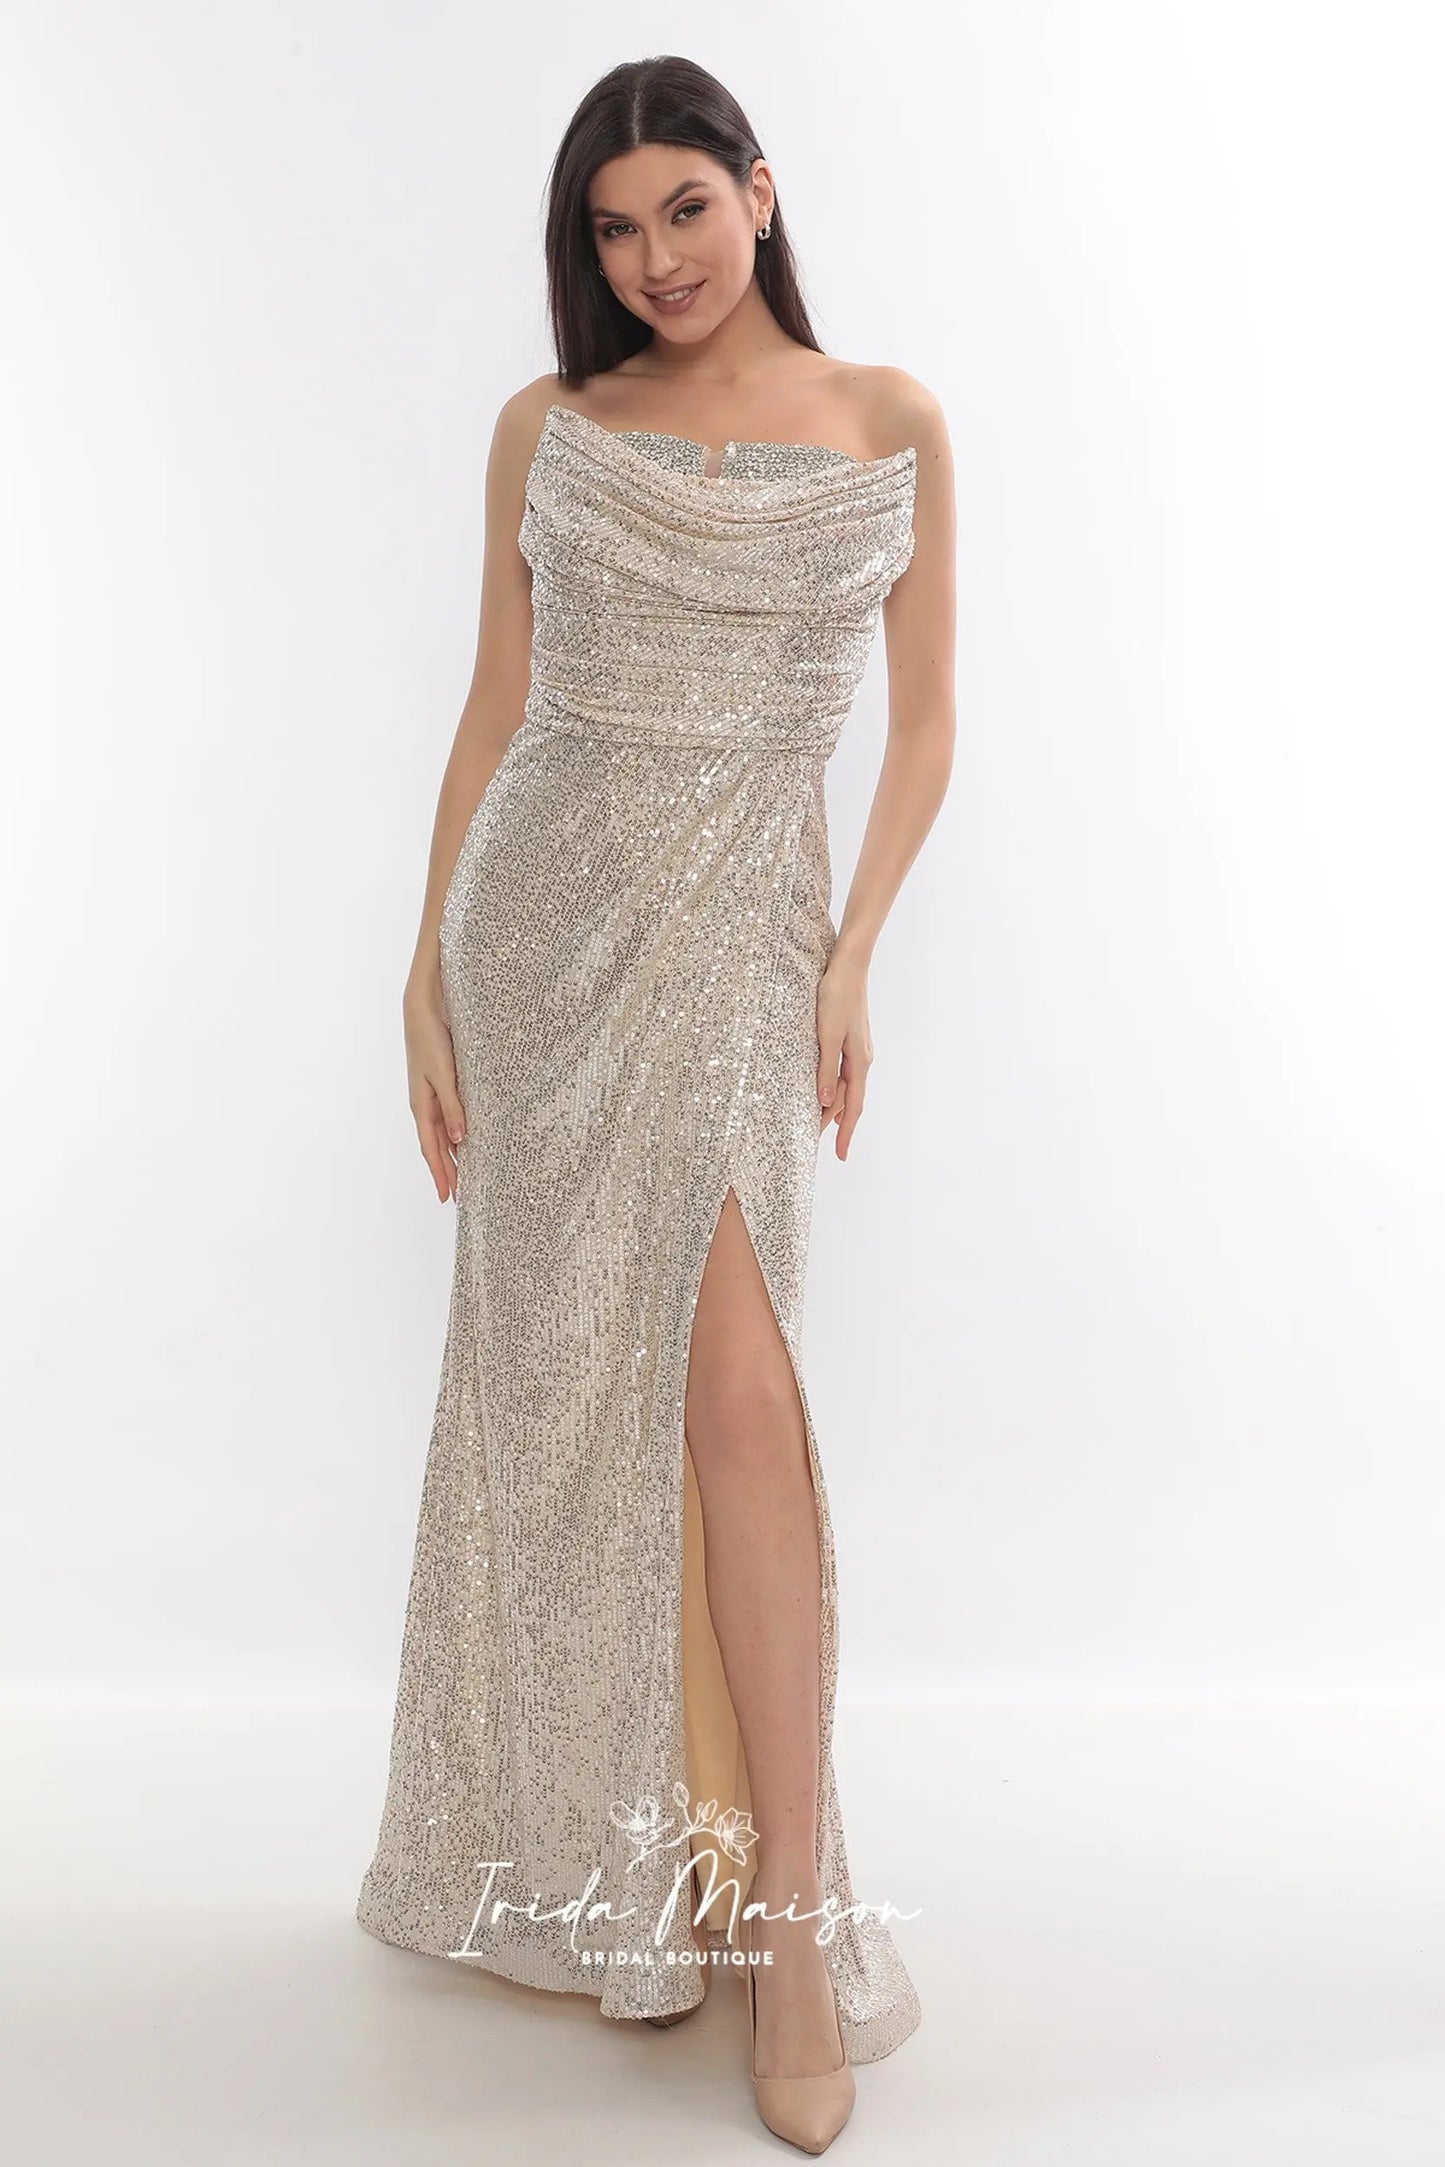 Sparkling champagne color Prom dress, Cocktail Dress, long Dress, Red Carpet Dress, Party Dress, Special Occasion Dress, Event Dress